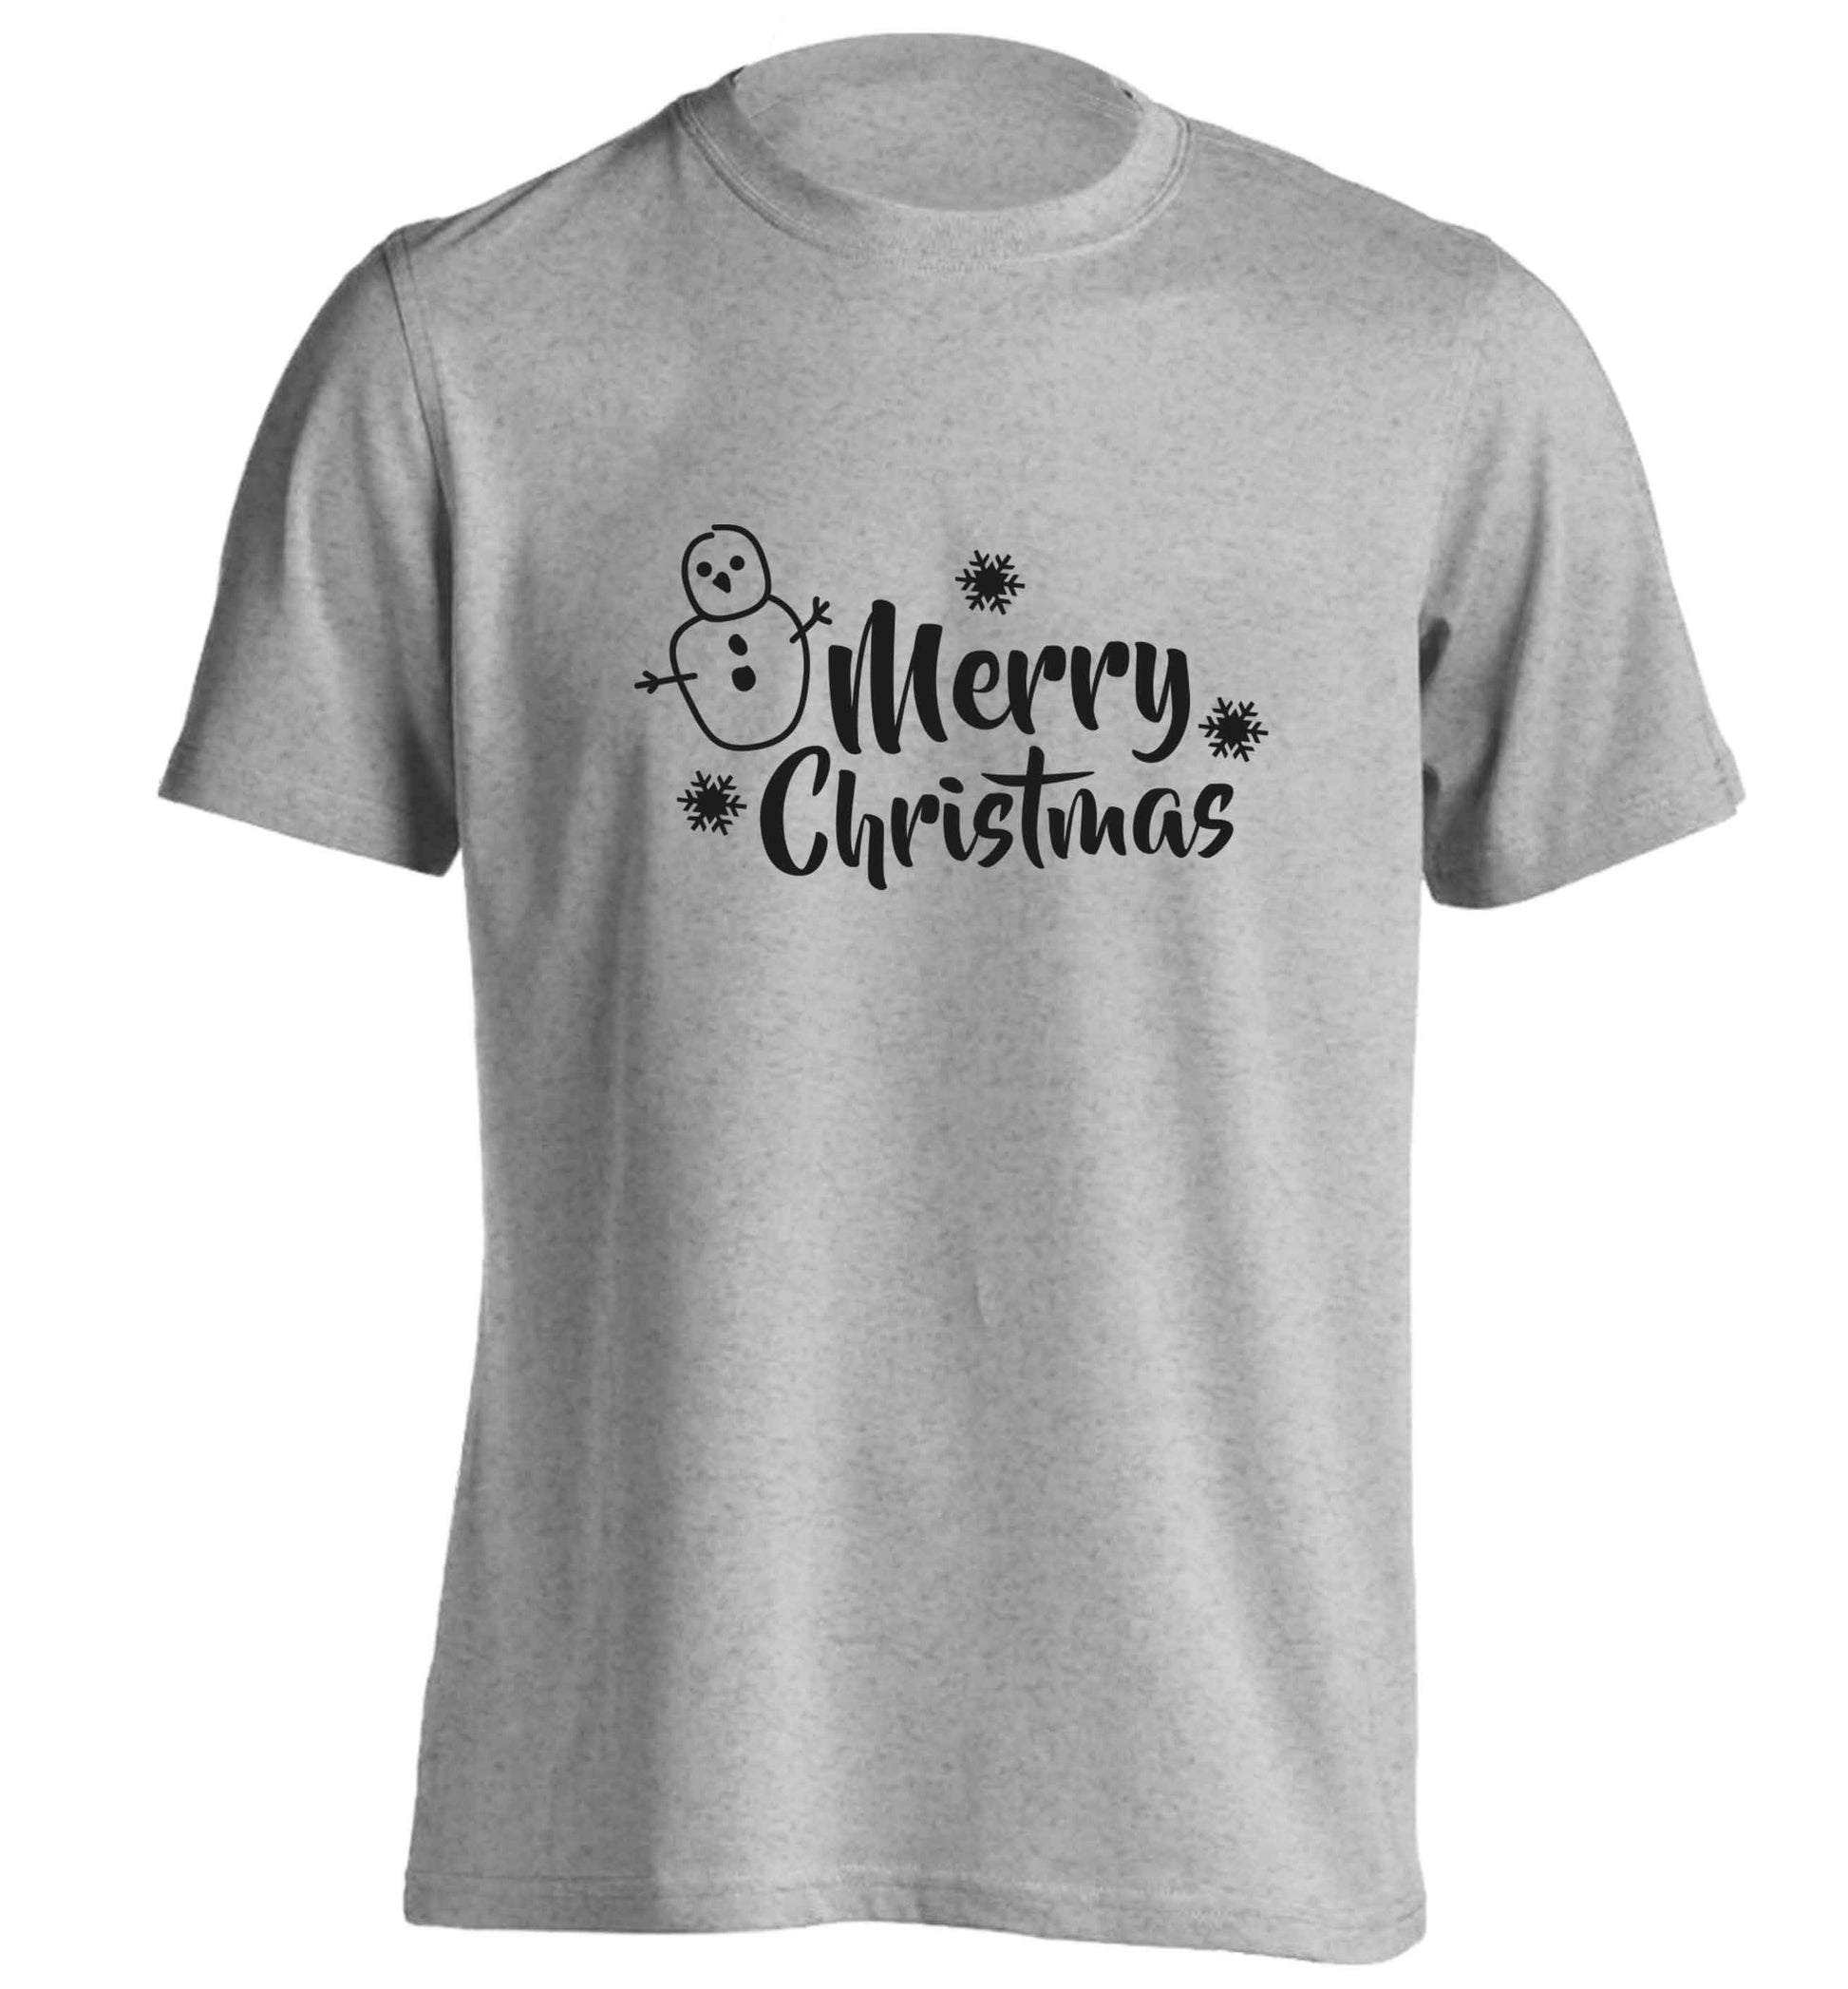 Merry Christmas - snowman adults unisex grey Tshirt 2XL